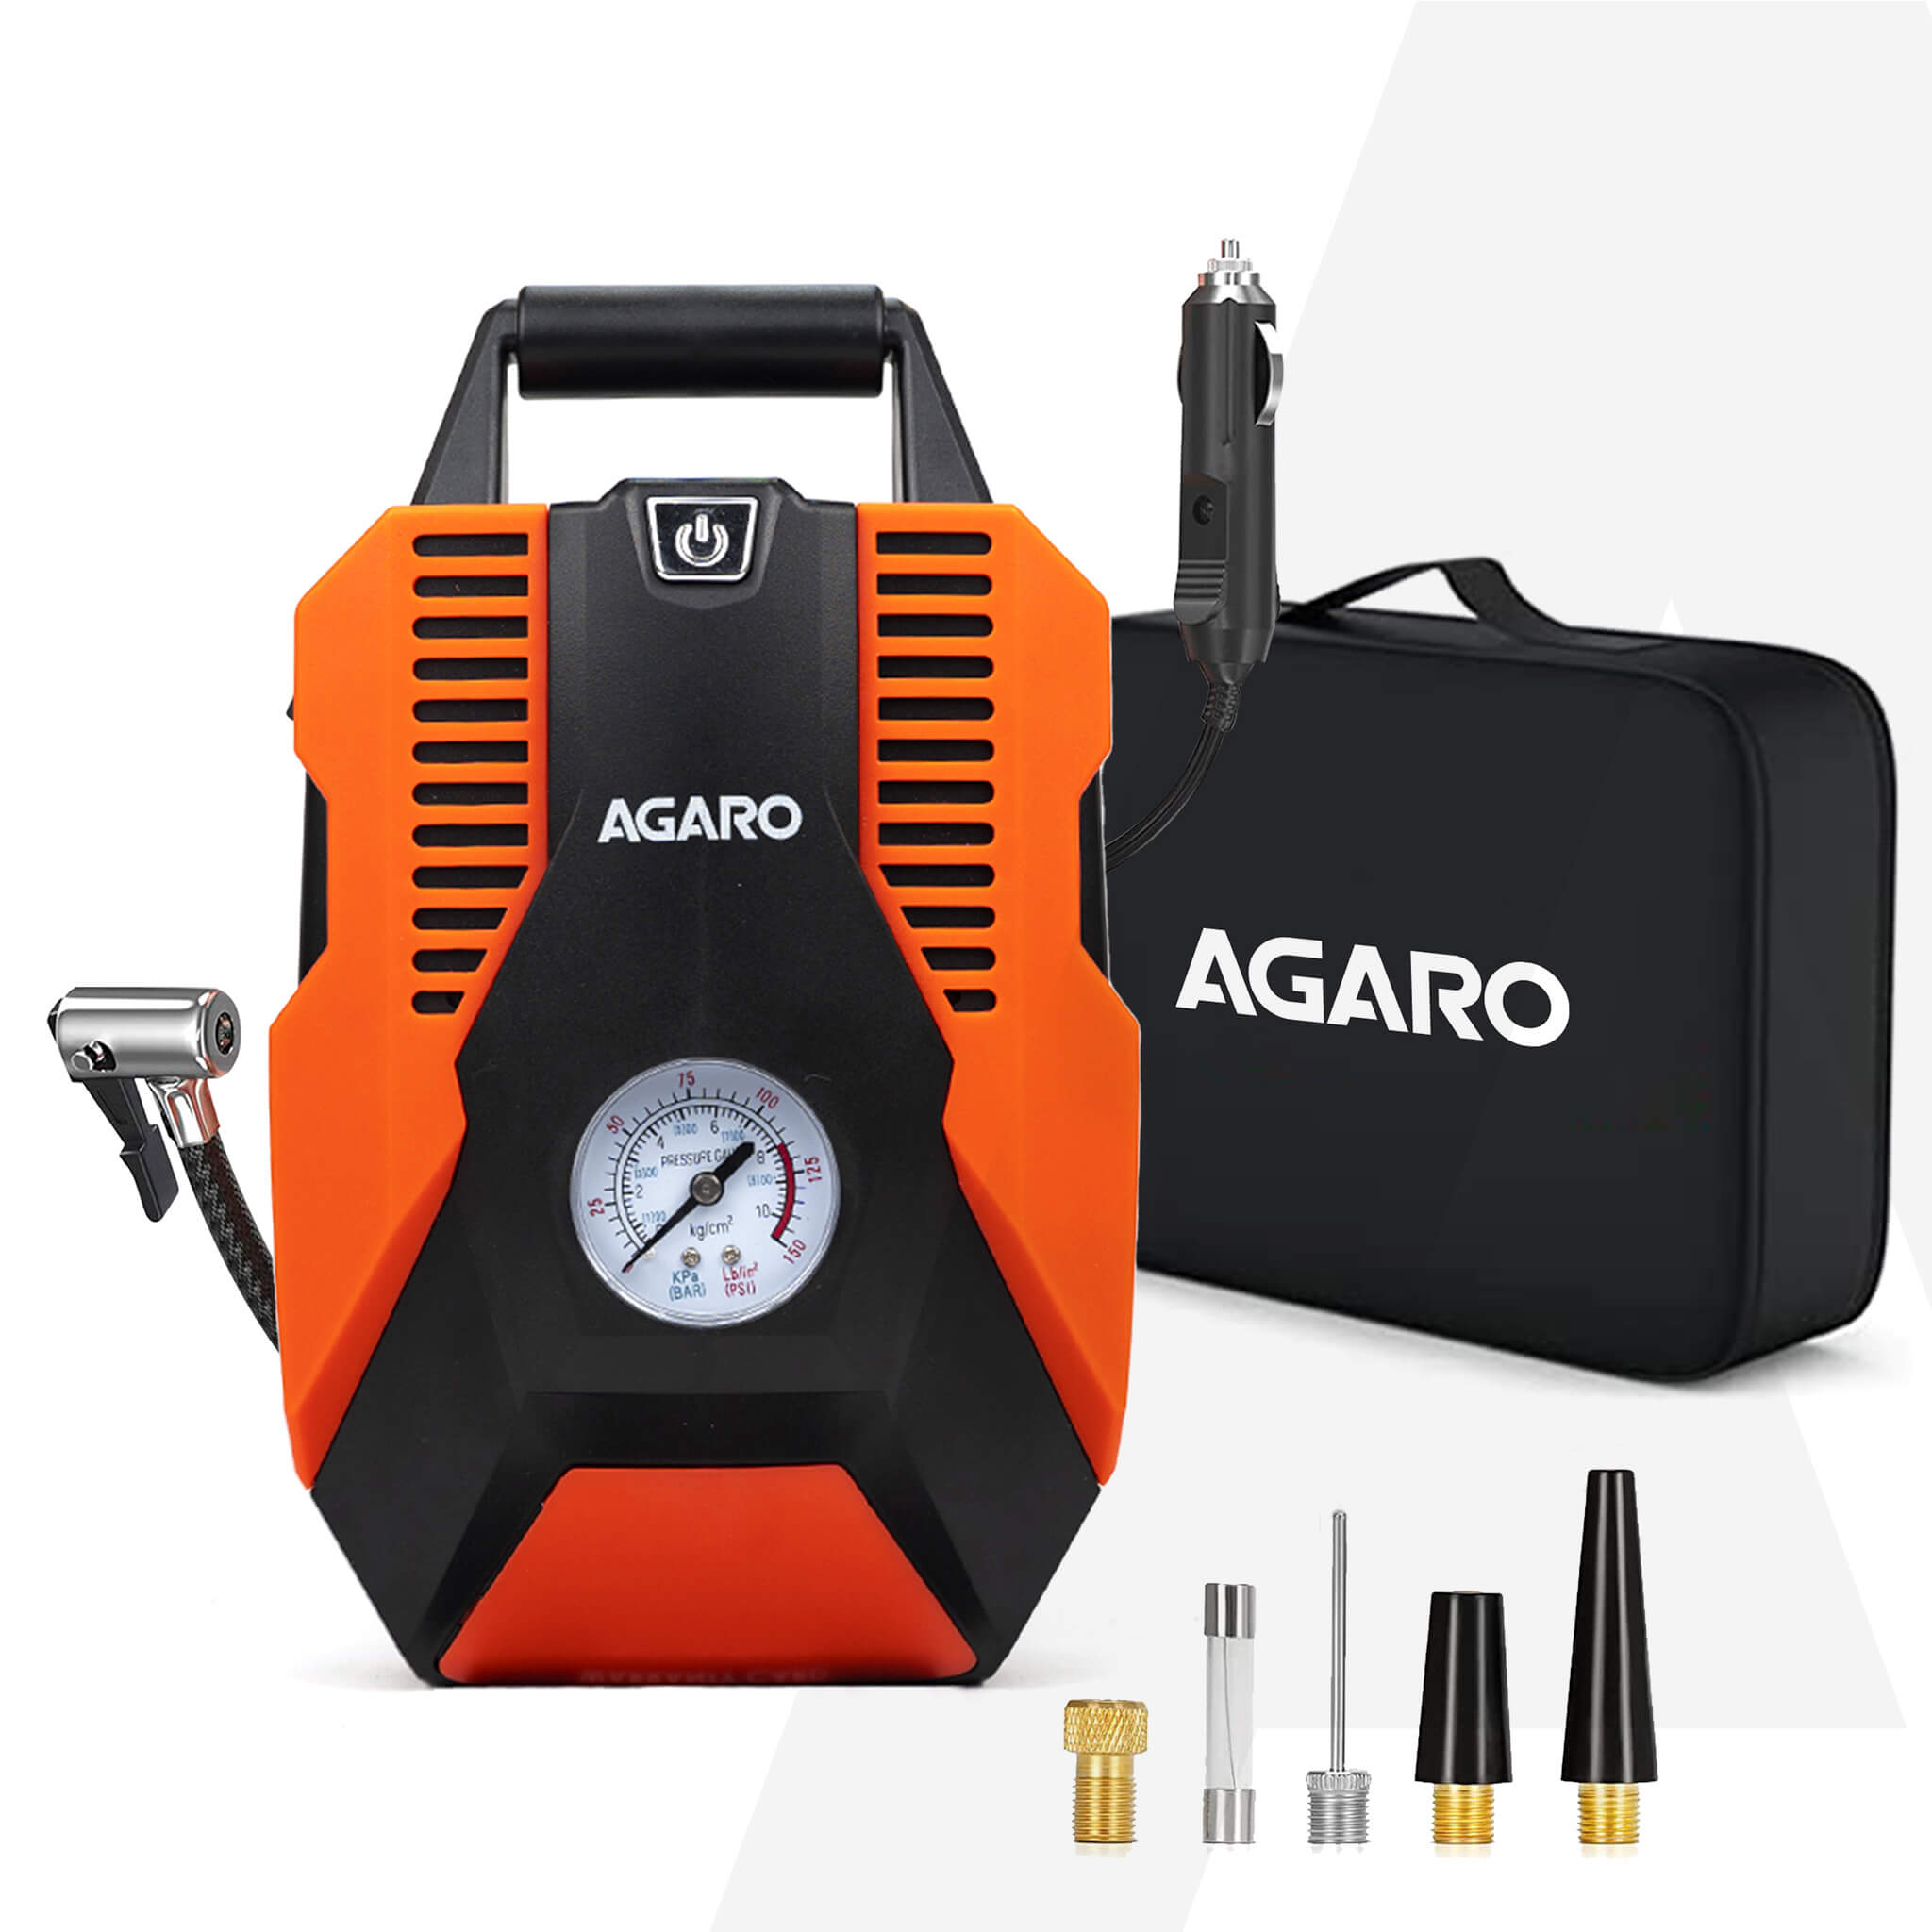 AGARO Force Analog tyre inflator with Emergency Light, 150 watts